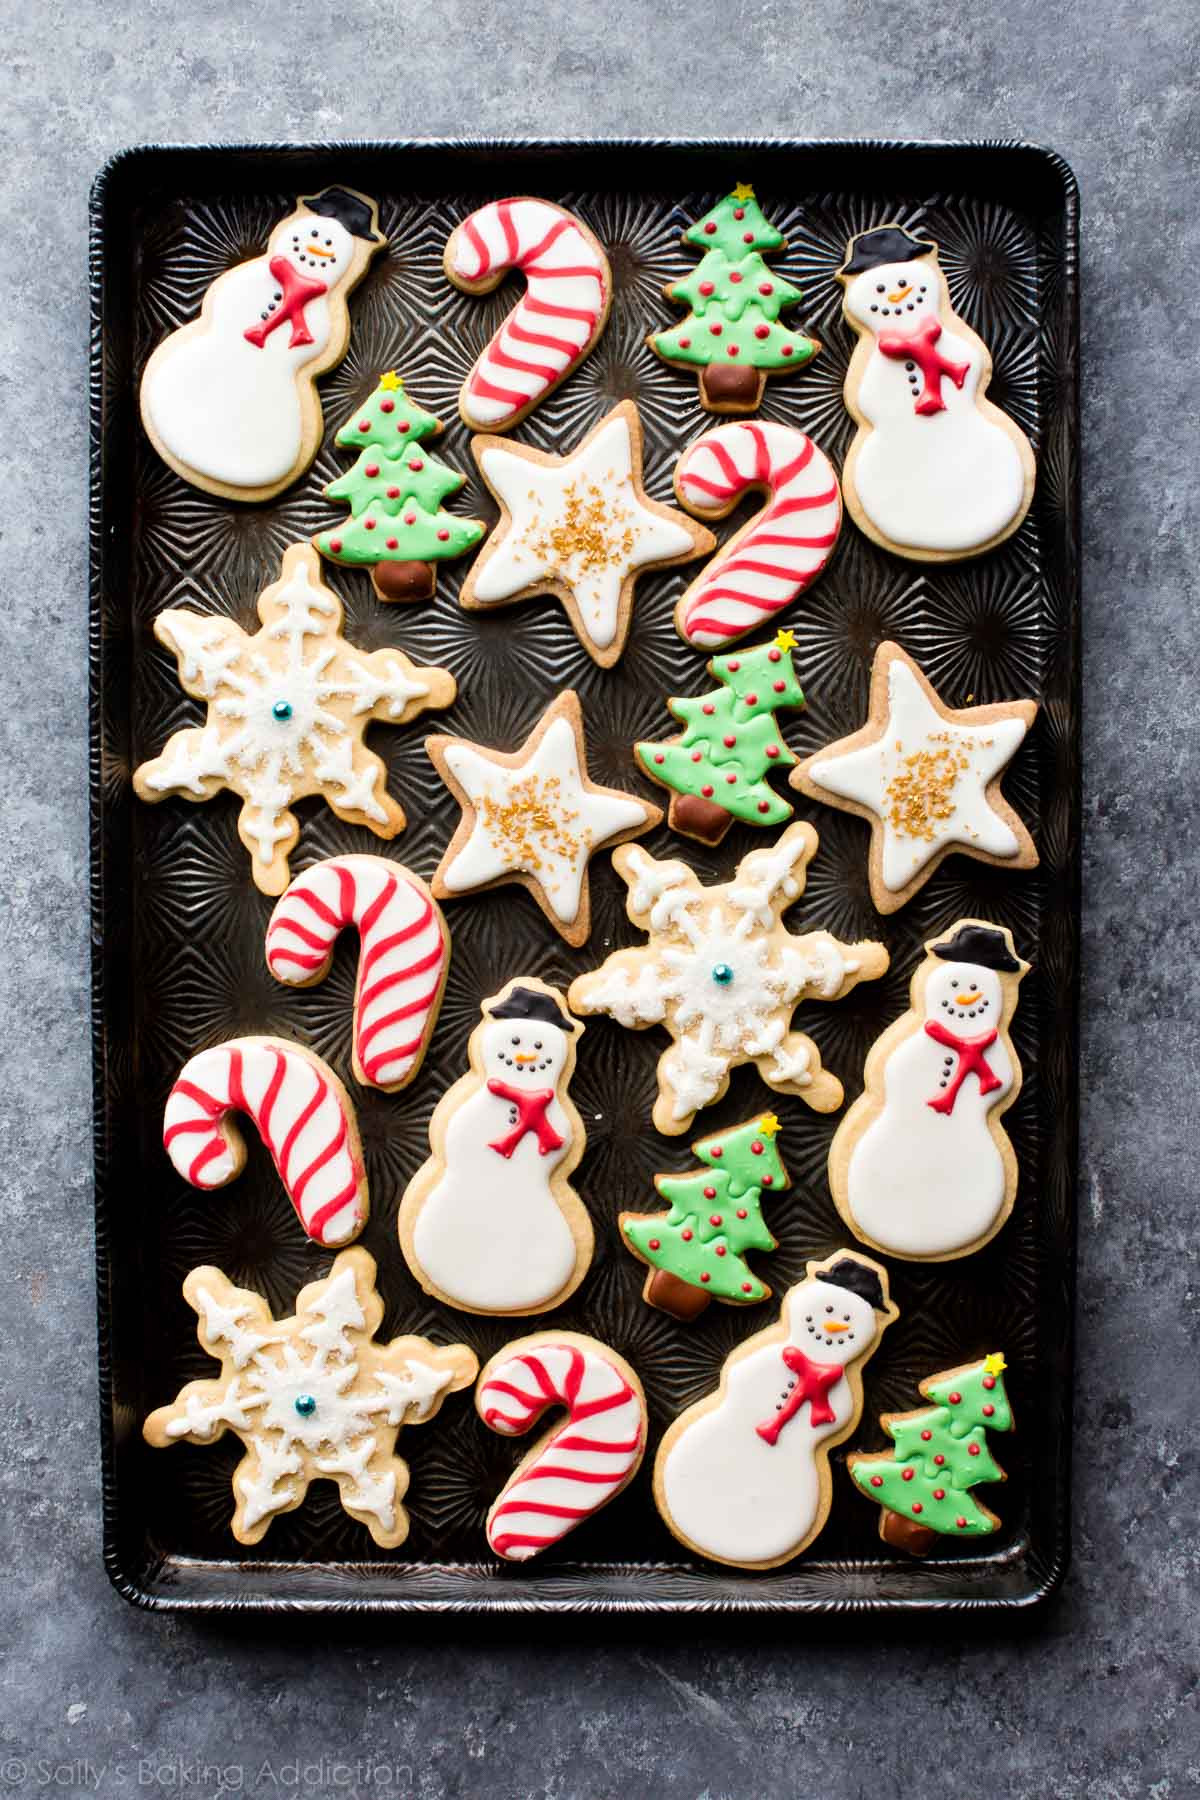 Decorated Christmas Sugar Cookies
 1 Sugar Cookie Dough 5 Ways to Decorate Sallys Baking